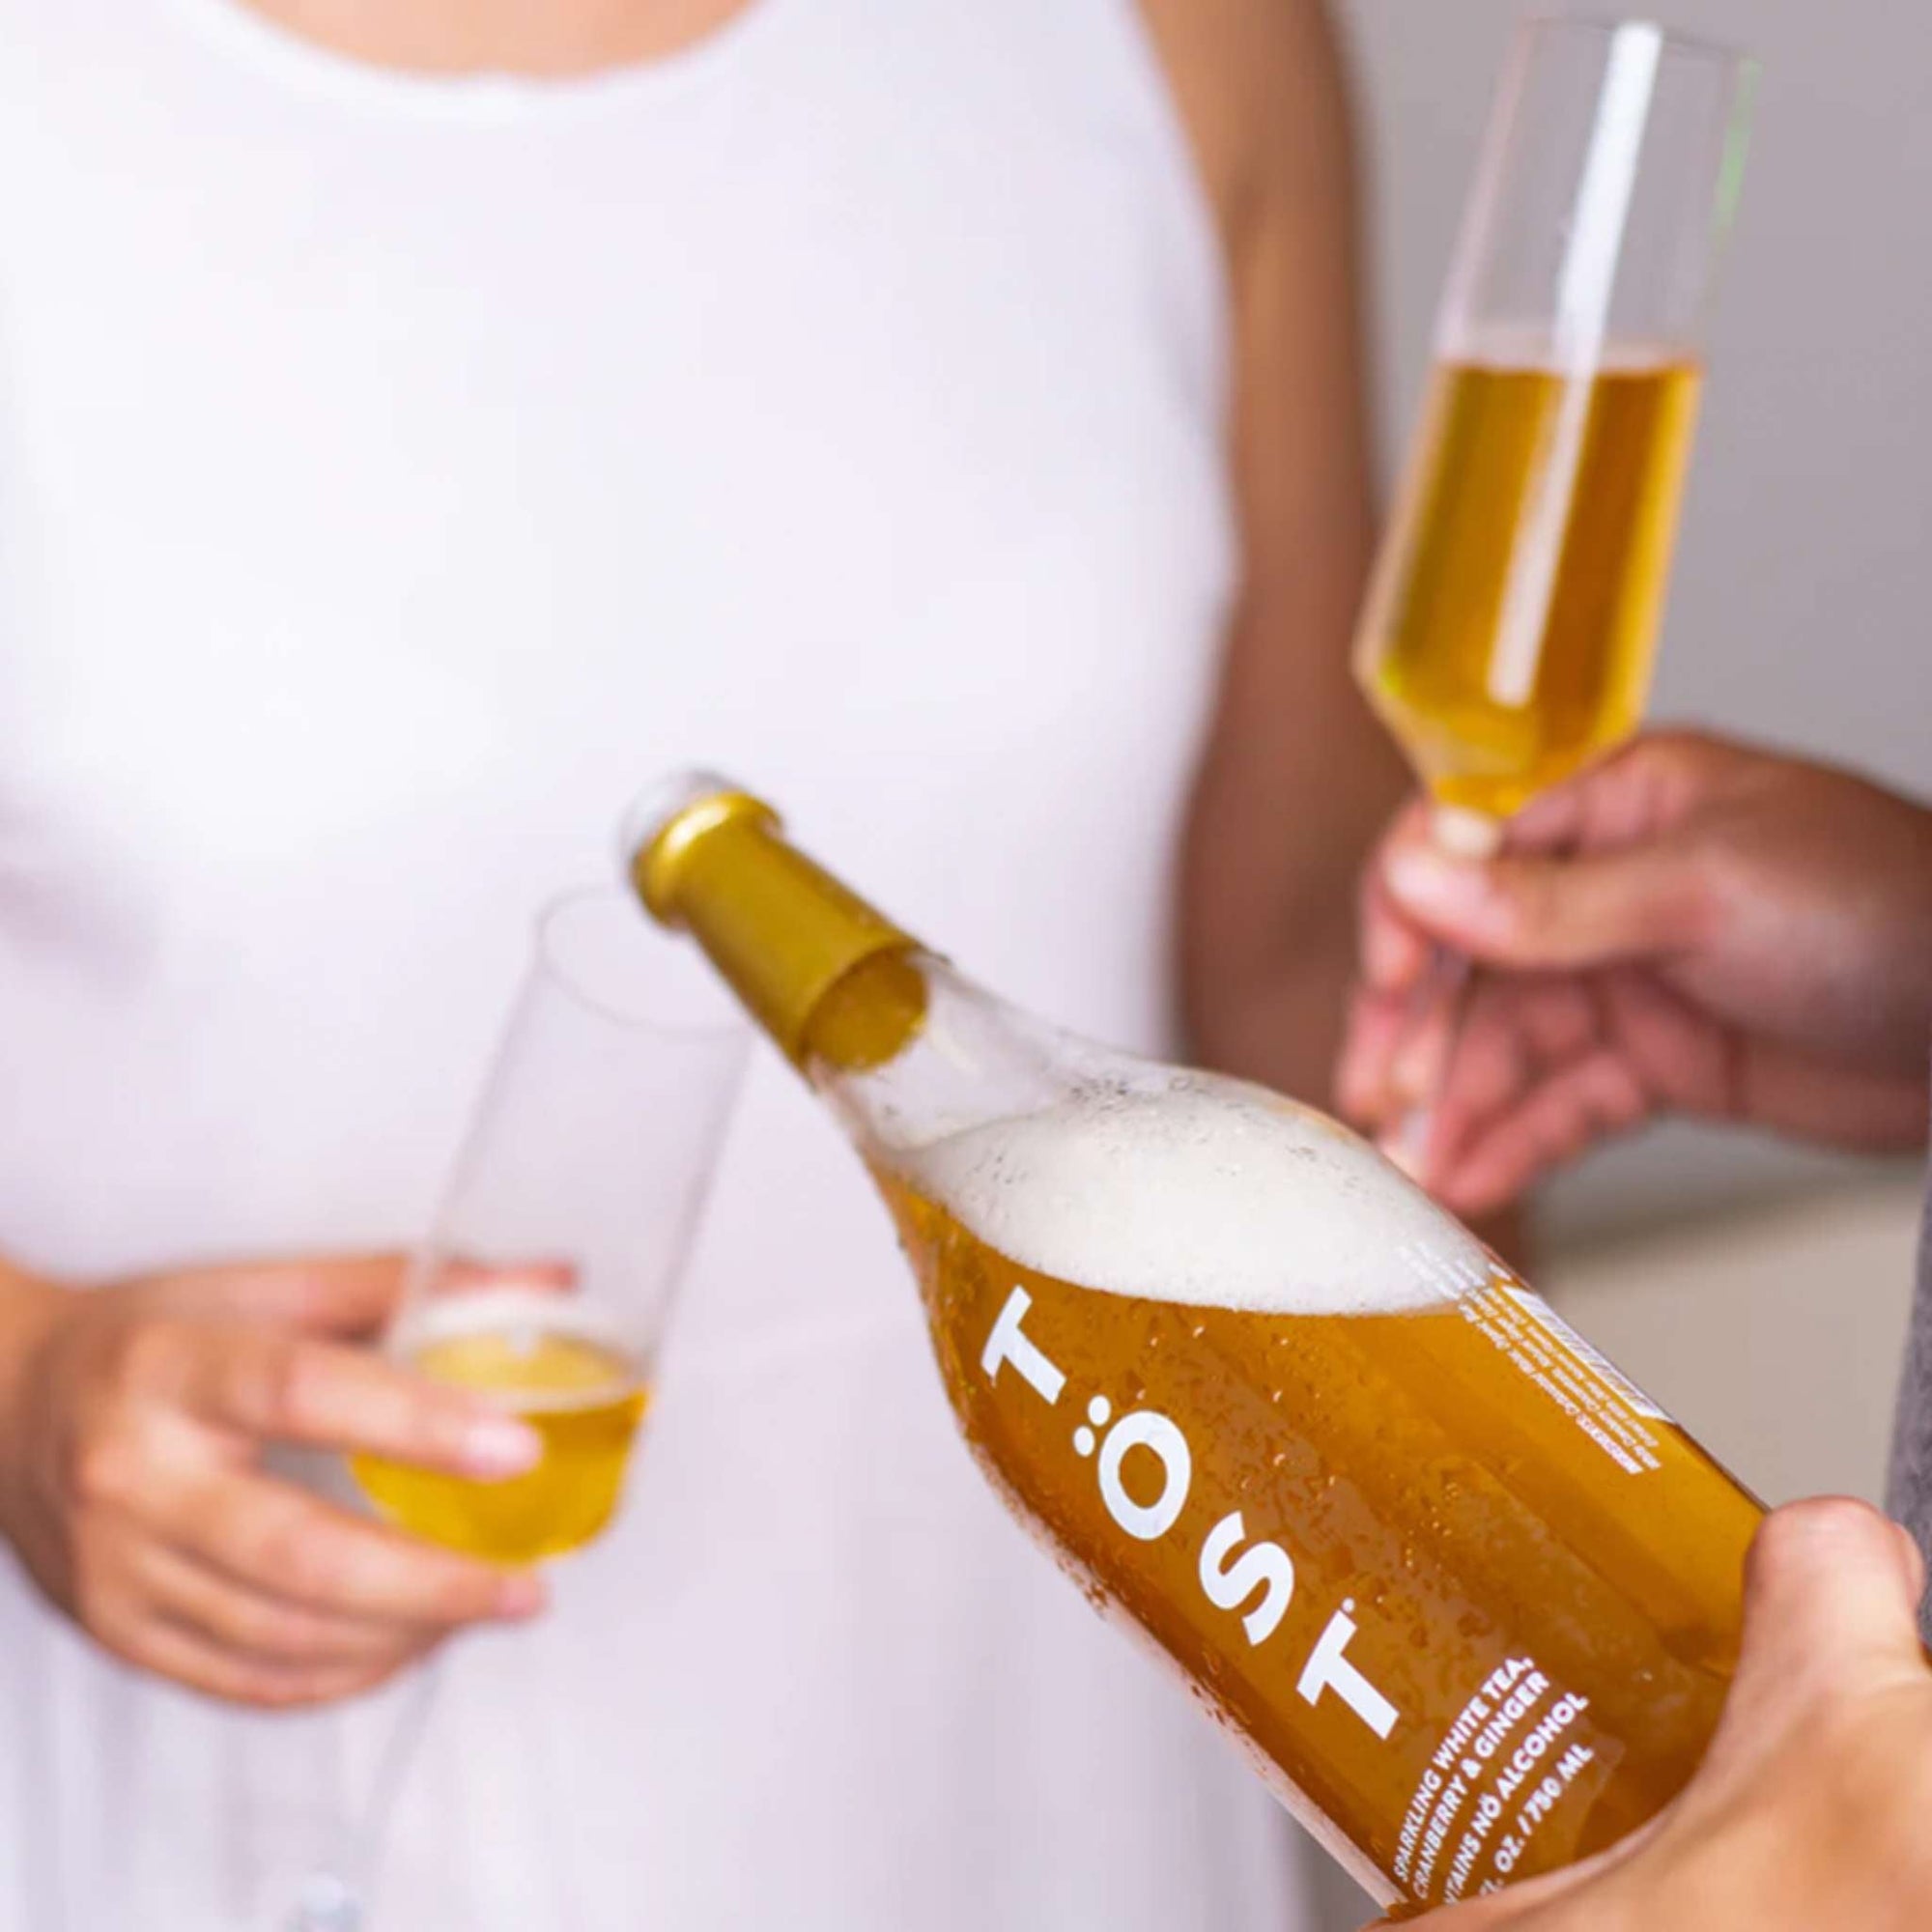 Töst - Tost Non-Alcoholic Sparkling Beverage - Boisson